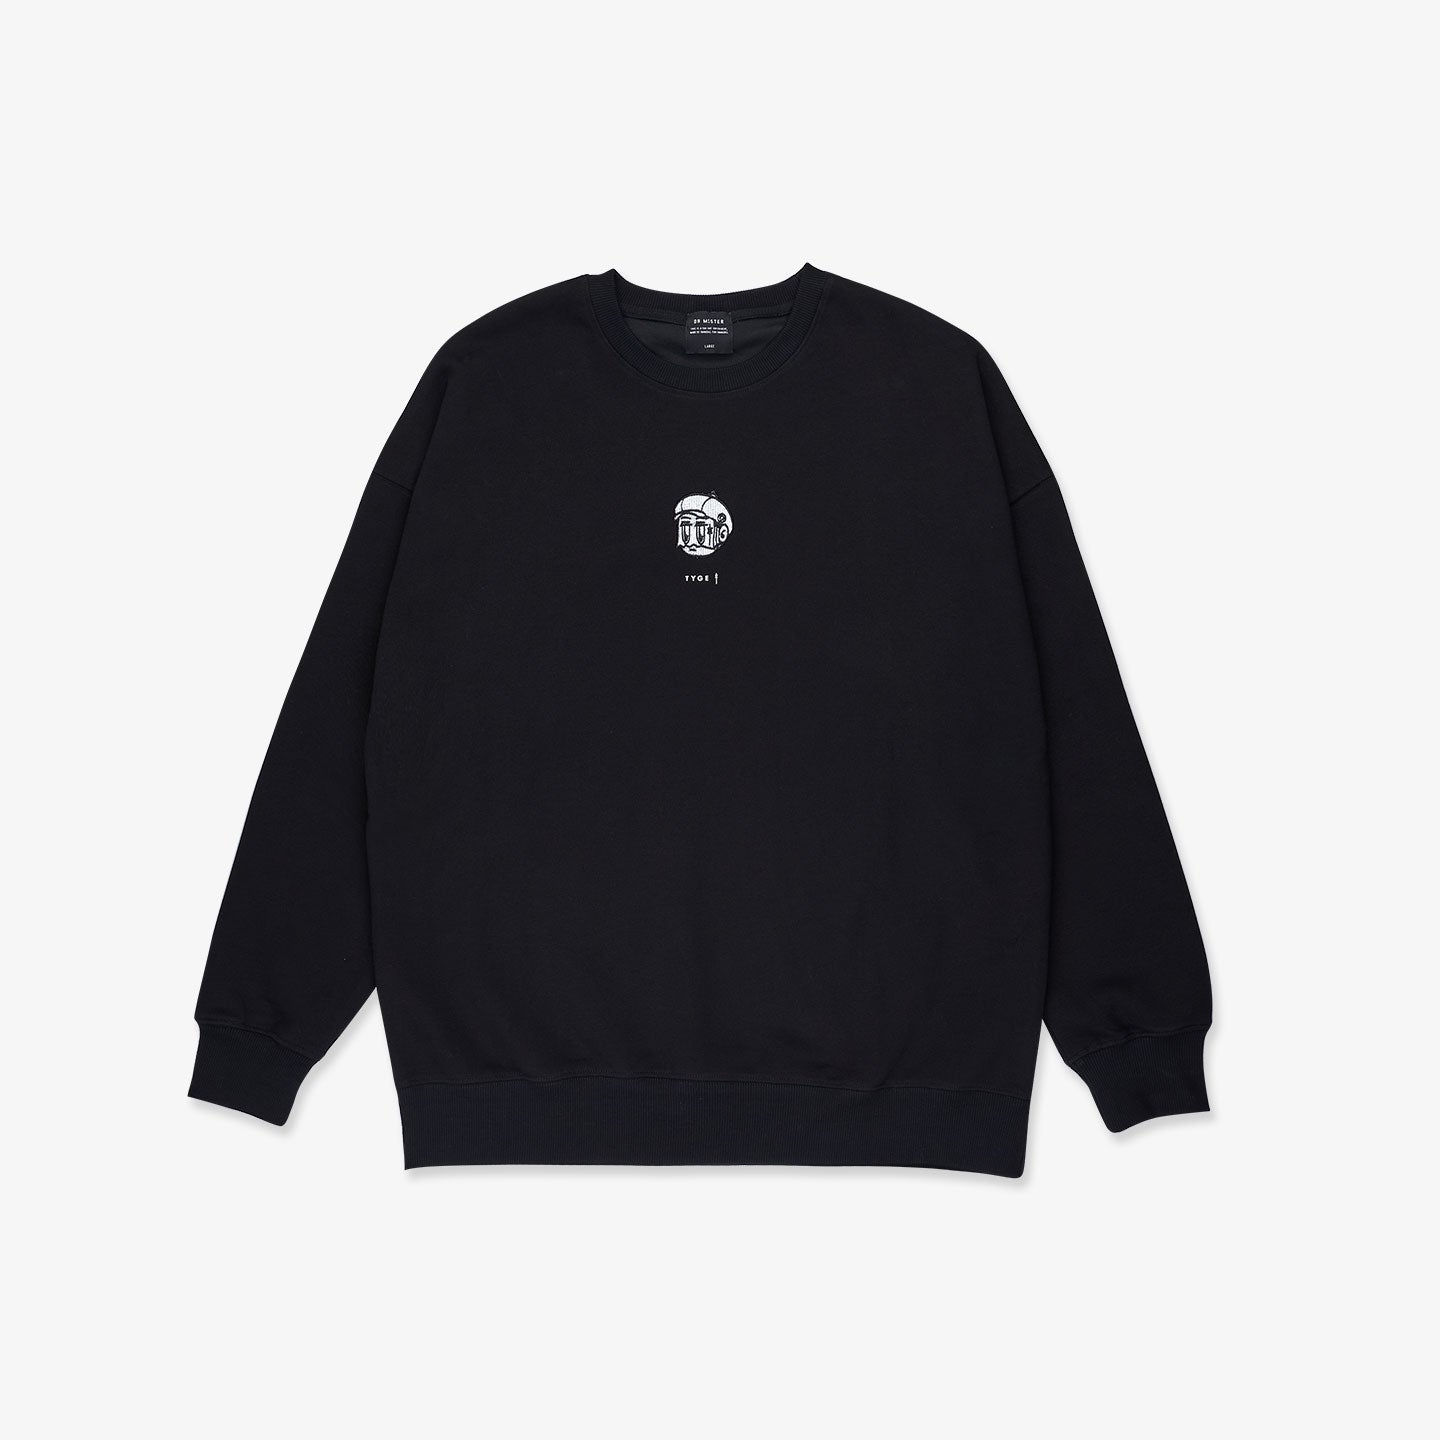 Outset Monochrome Sweatshirt - Black